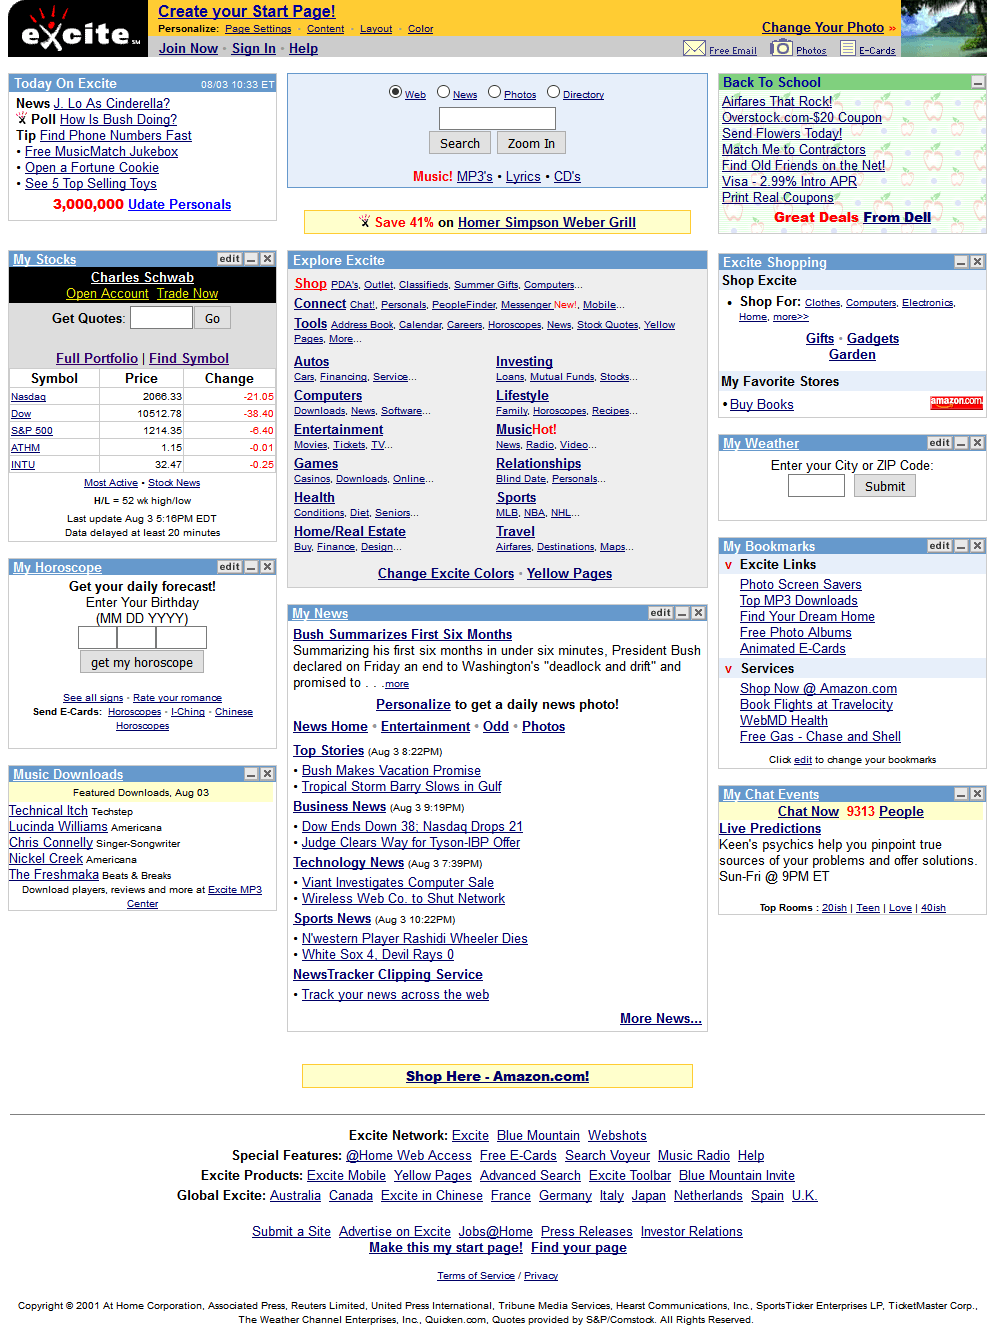 Excite website in 2001